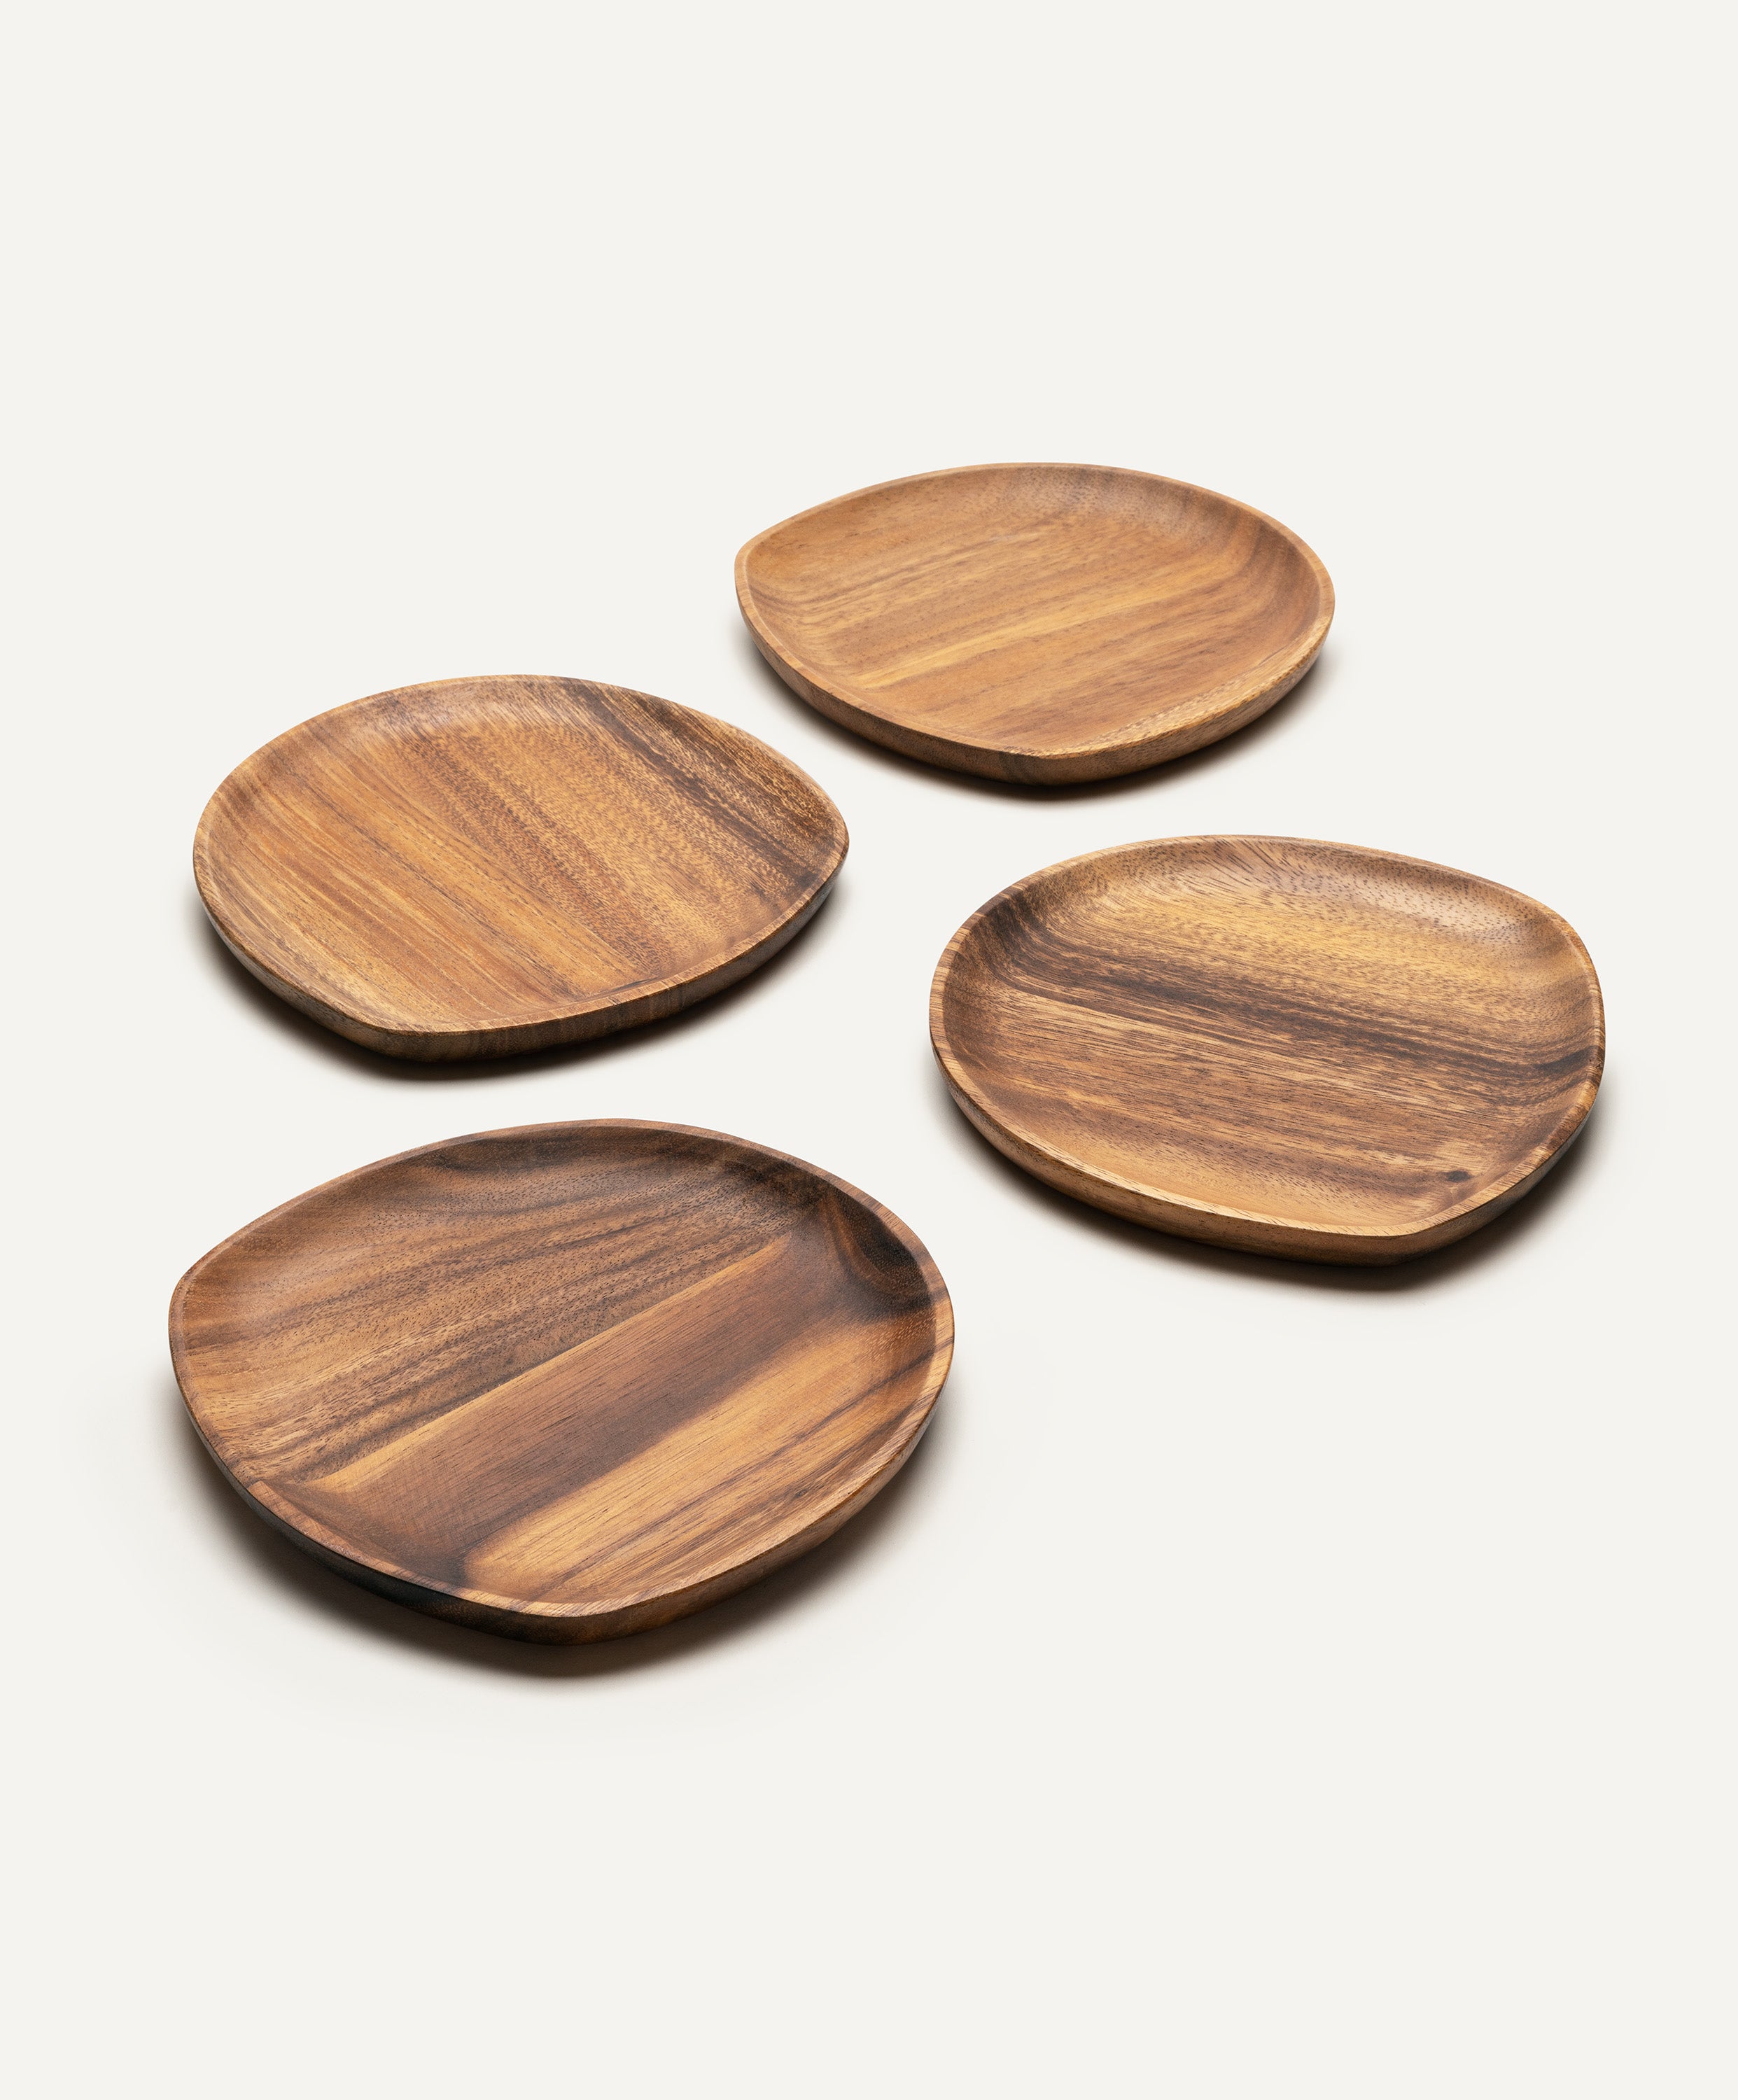 Foree Wooden Plate Set - Medium